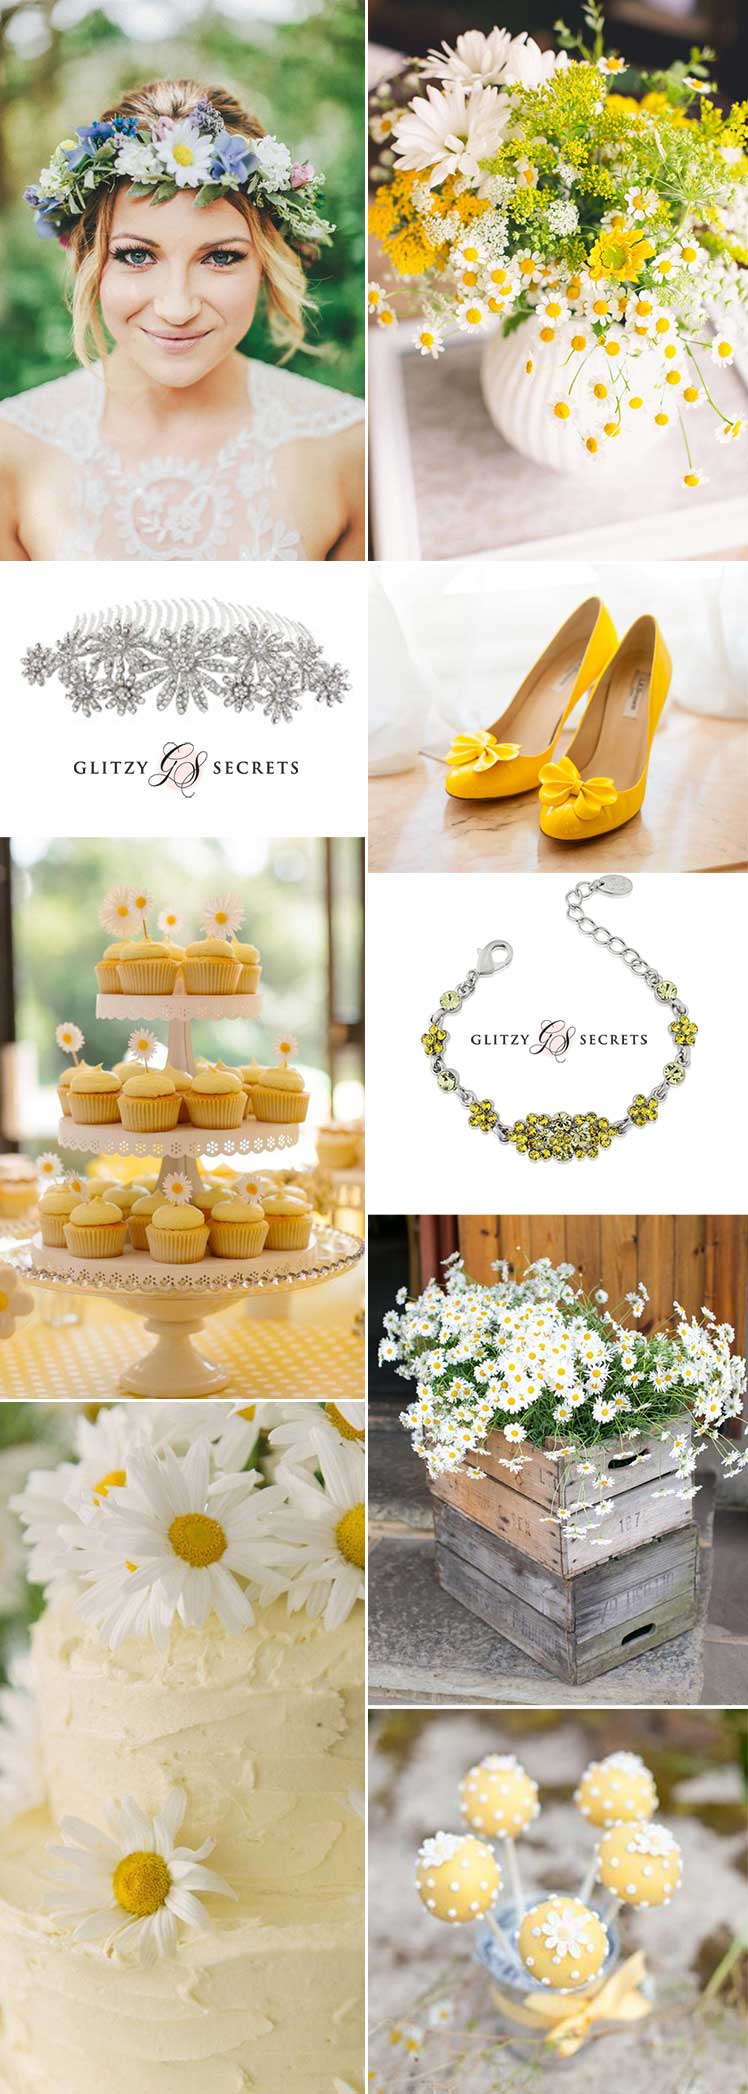 Daisy wedding theme inspiration